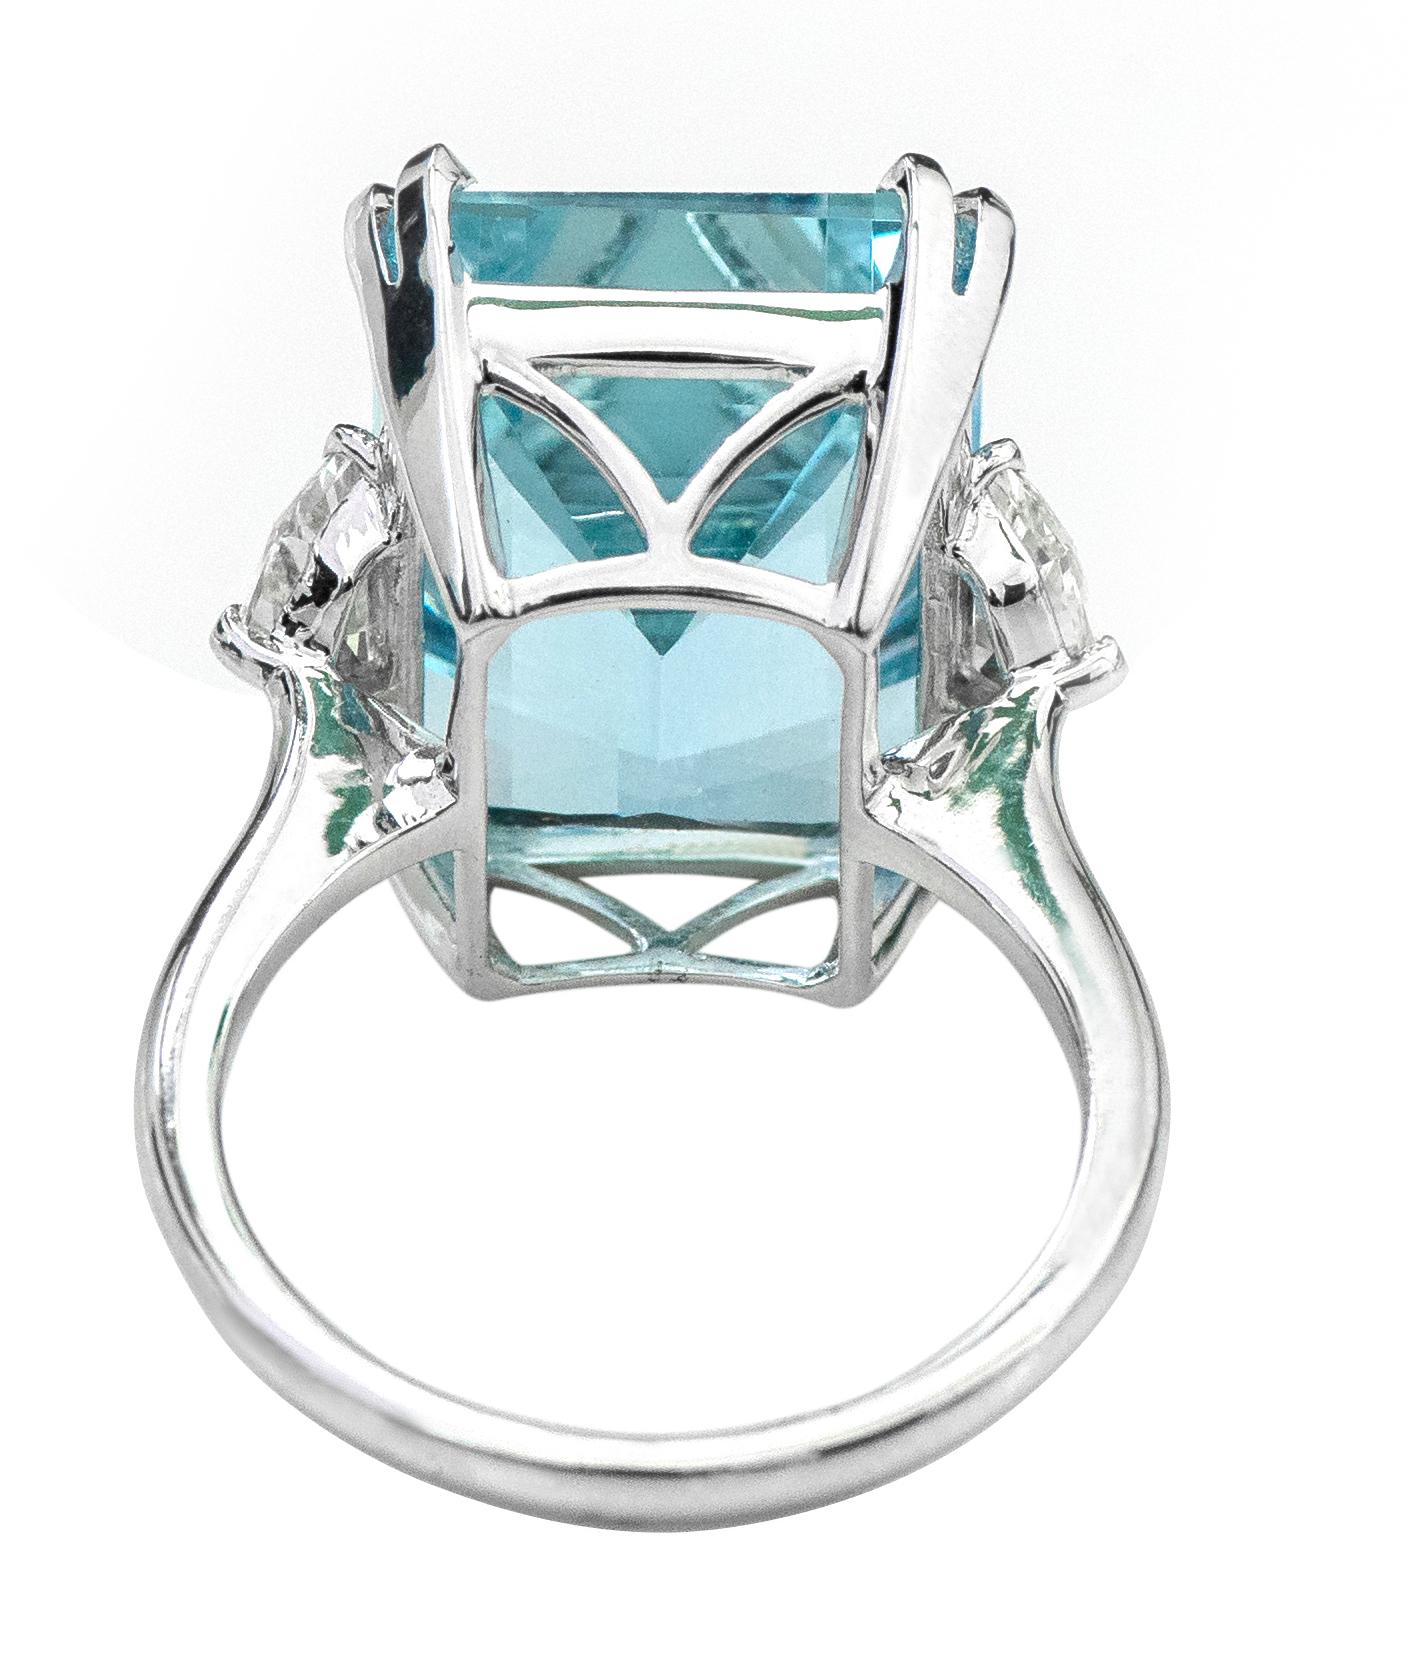 Women's 18 Karat White Gold 15.03 Carat Emerald-Cut Aquamarine and Diamond Cocktail Ring For Sale